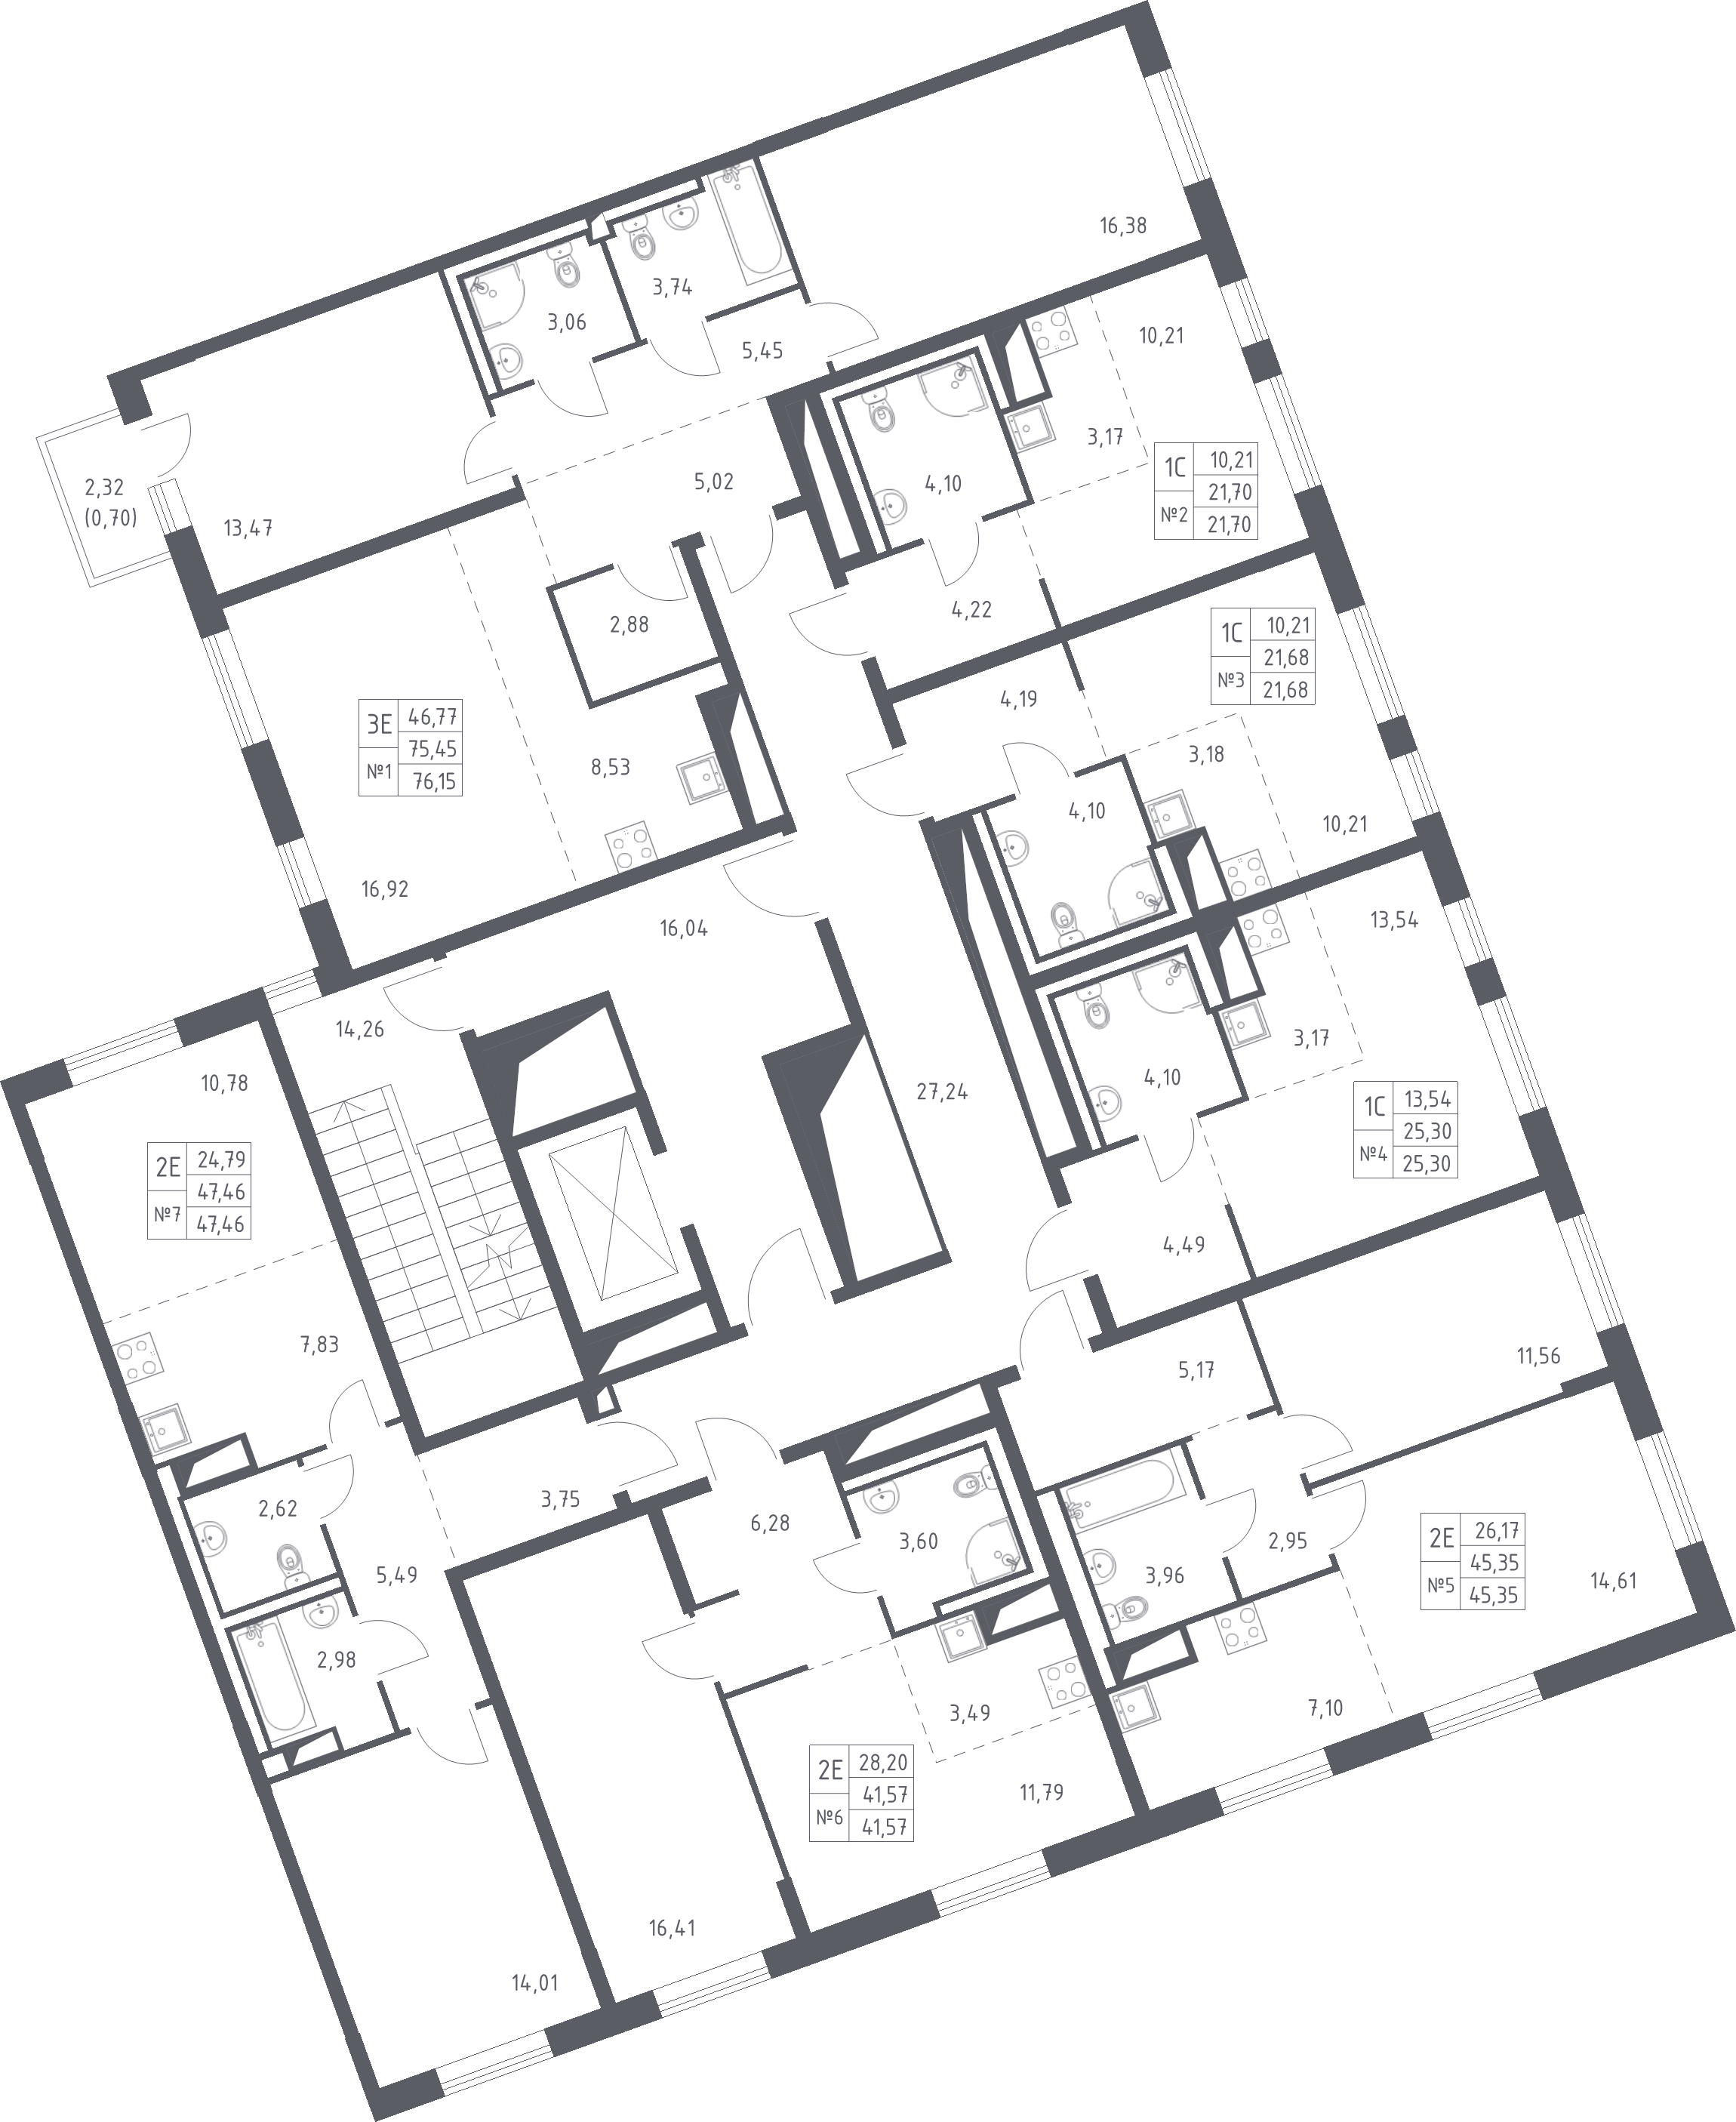 3-комнатная (Евро) квартира, 76.15 м² - планировка этажа